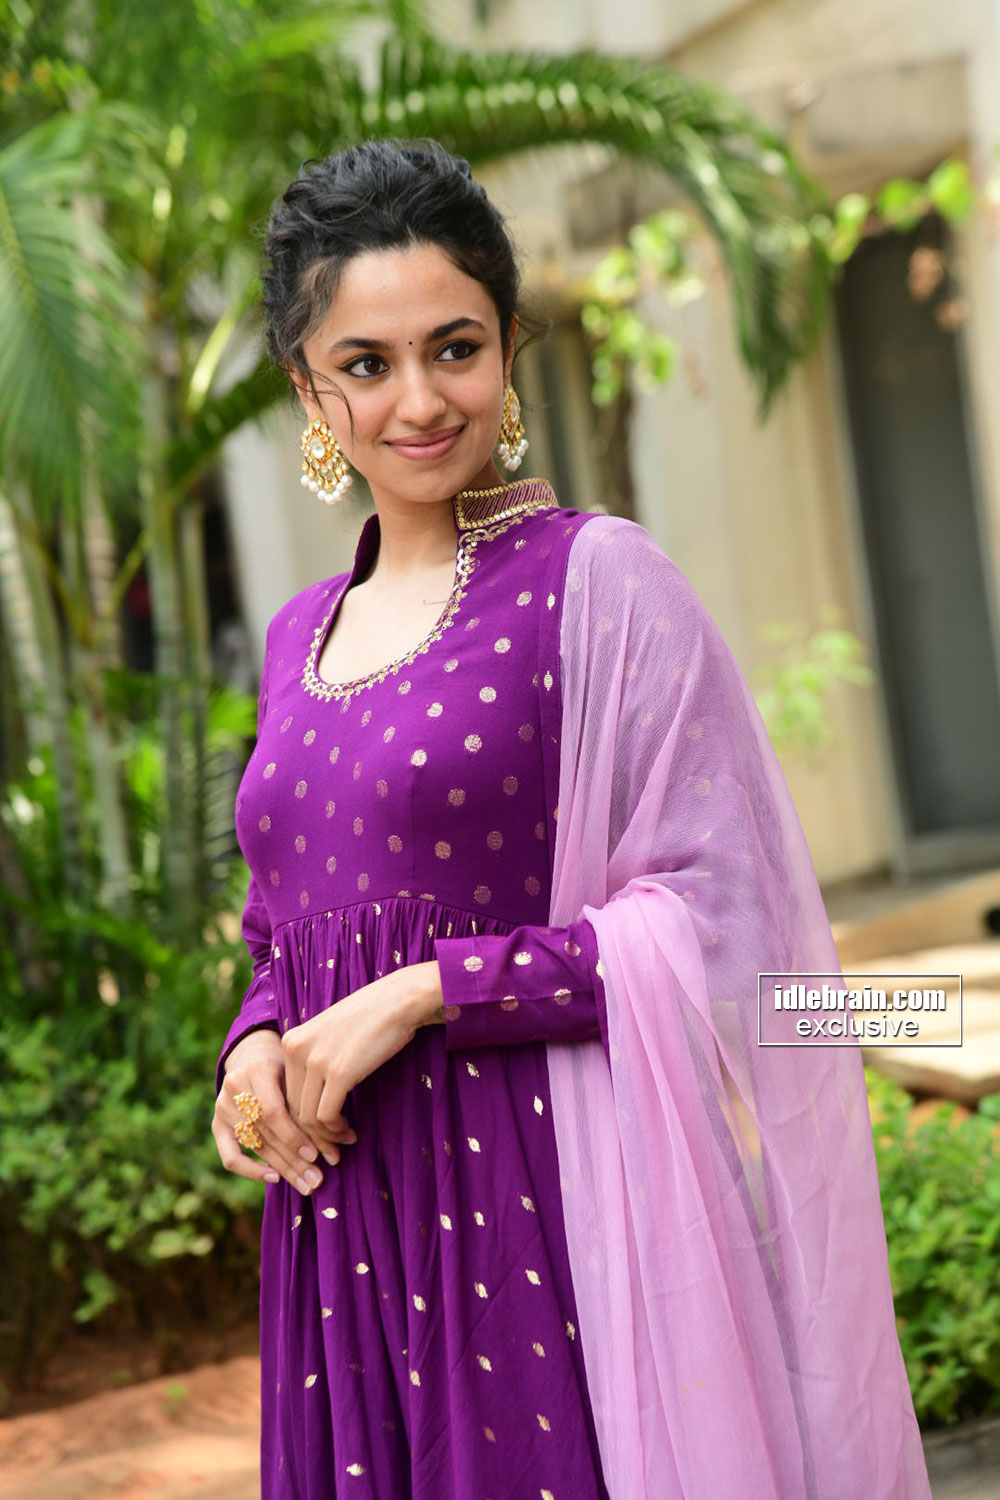 Malavika Nair photo gallery - Telugu cinema actress